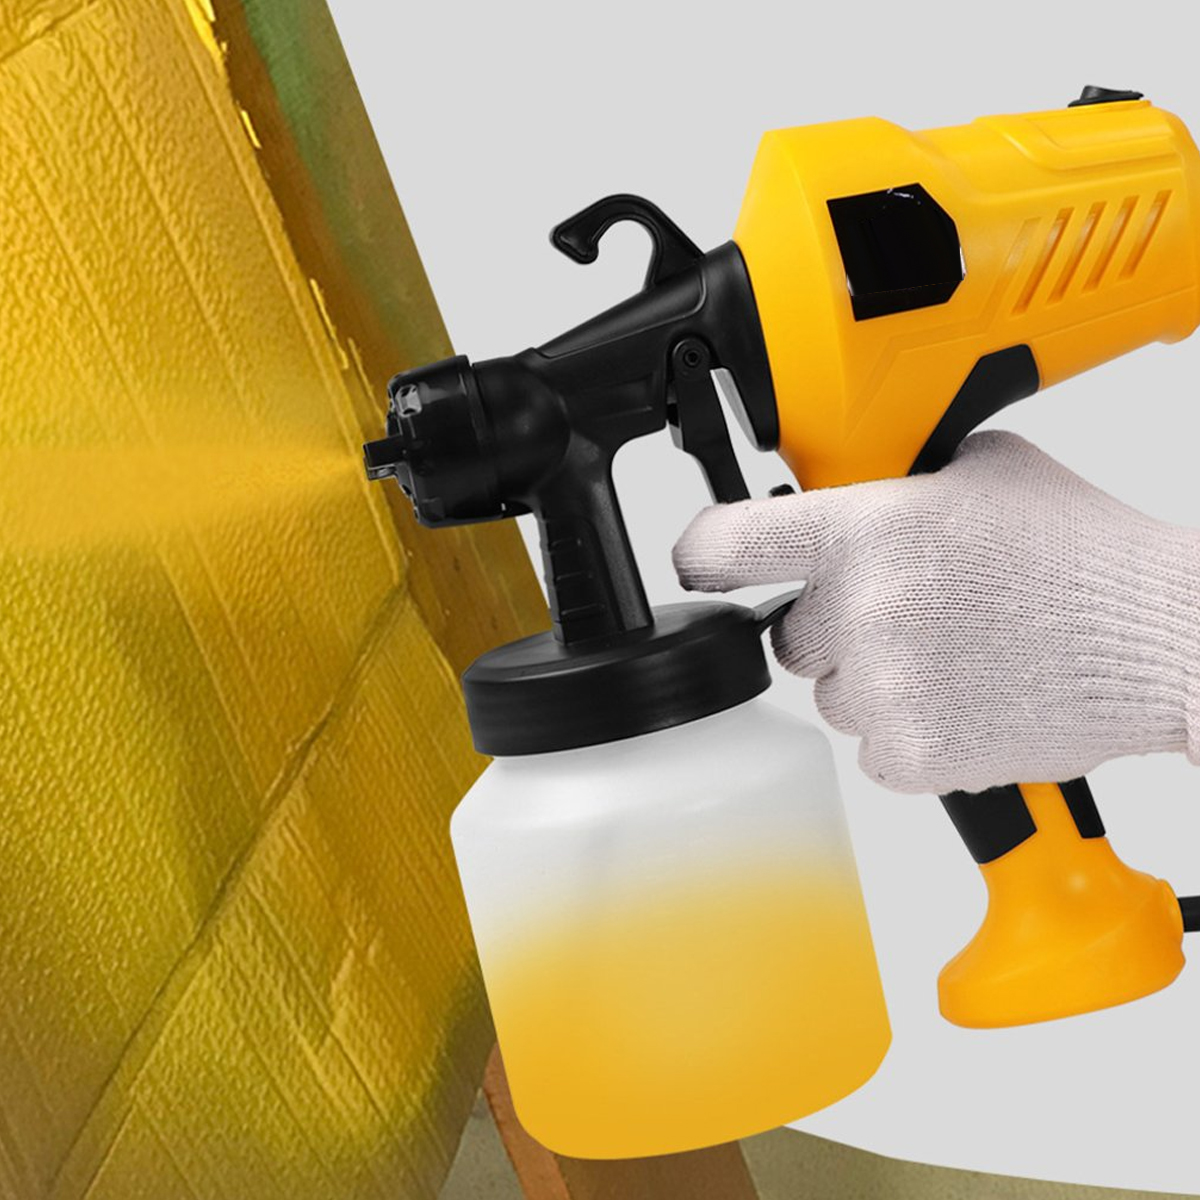 800ml-Electric-Paint-Spray-Guns-Disinfectant-Sprayer-Household-Portable-Disinfecting-Spray-DIY-Paint-1866548-4